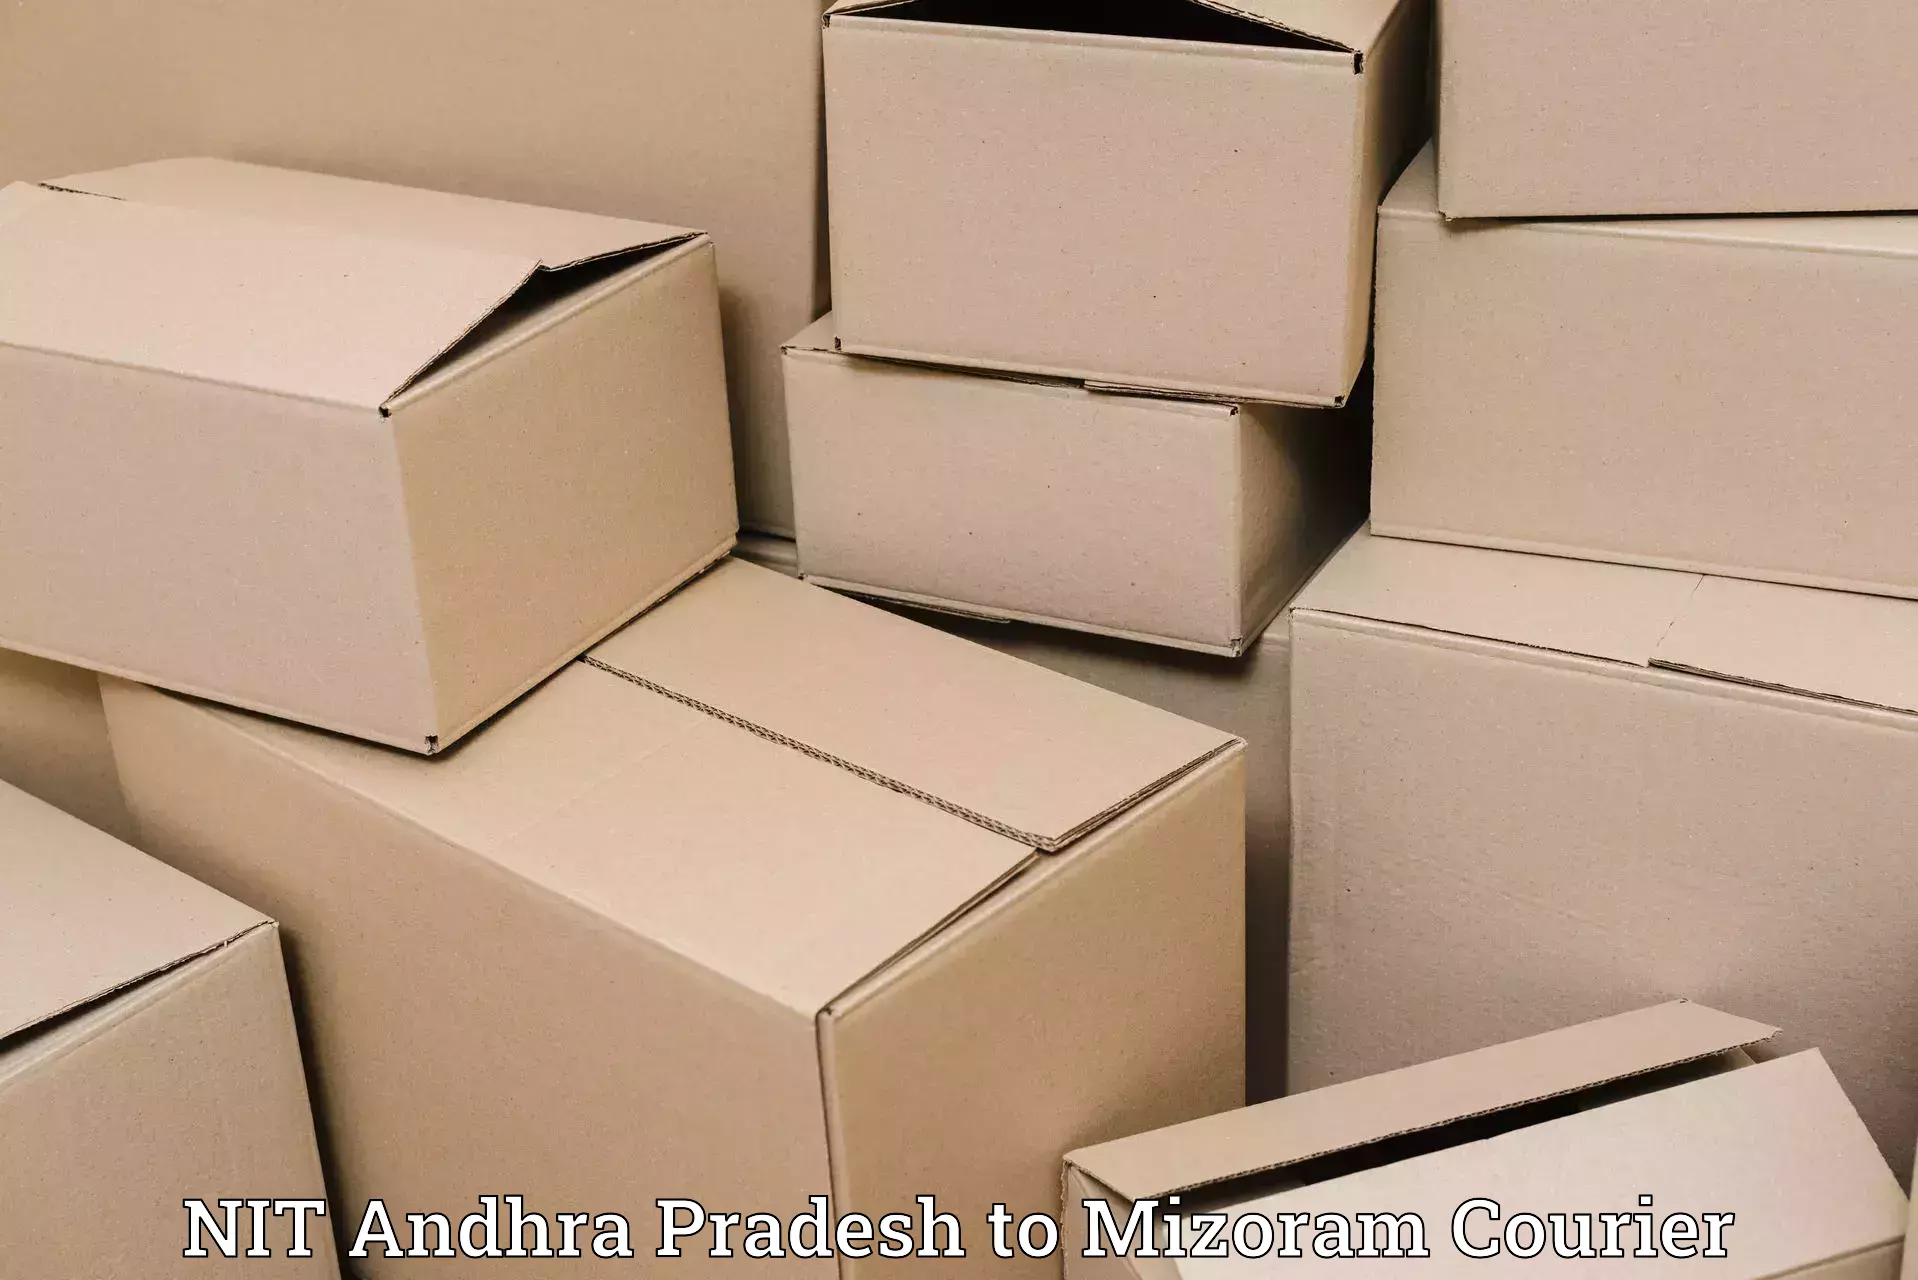 Pharmaceutical courier NIT Andhra Pradesh to Aizawl